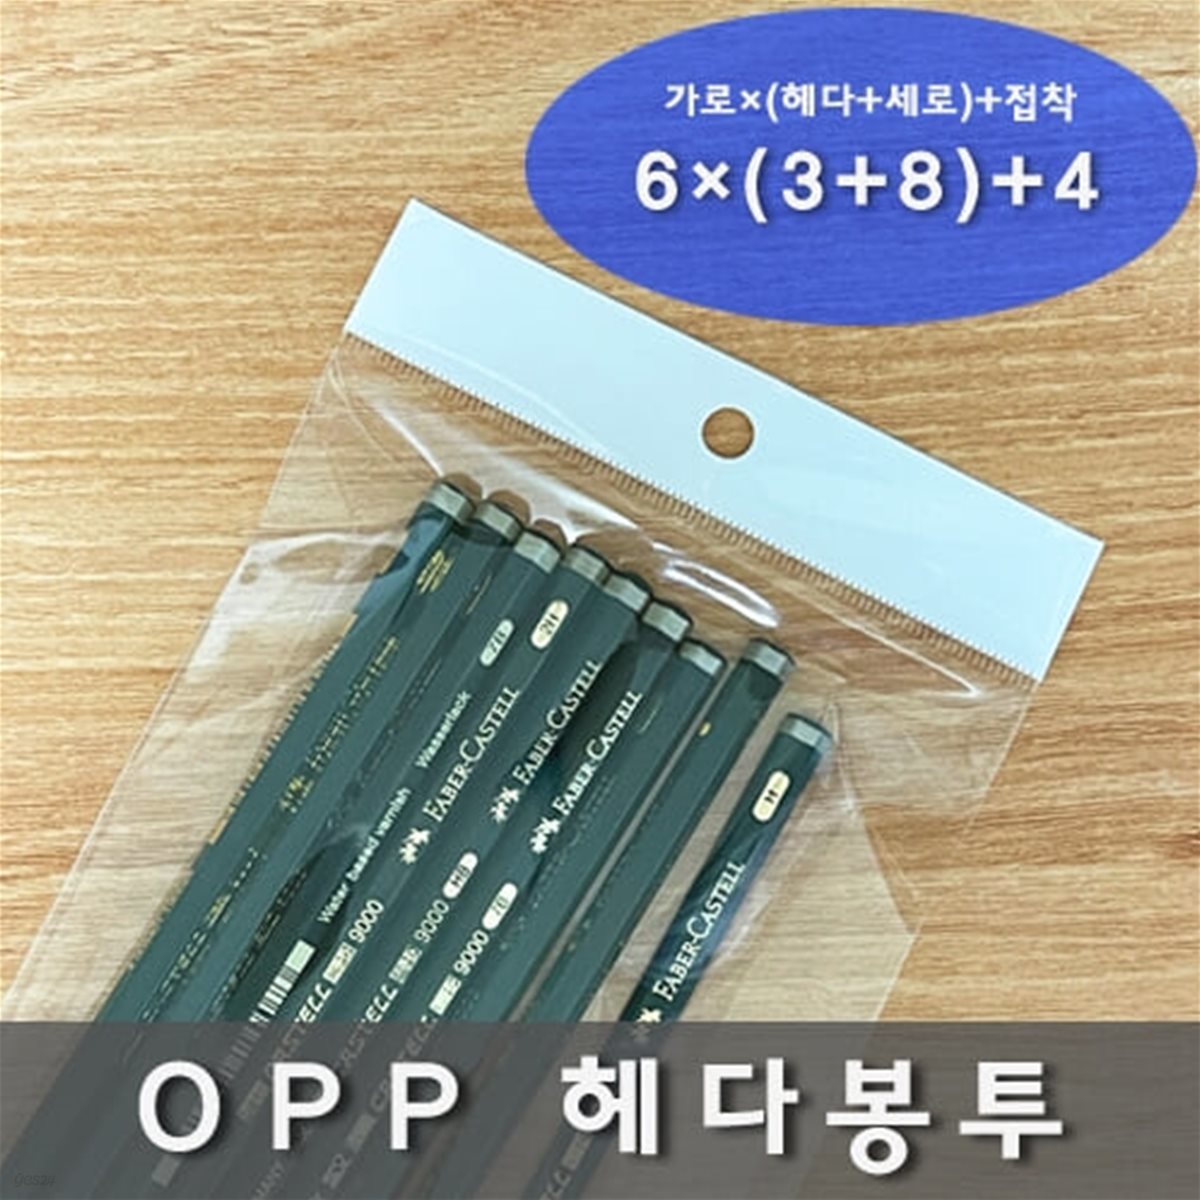 OPP 헤다봉투 6×(3+8)+4 200매